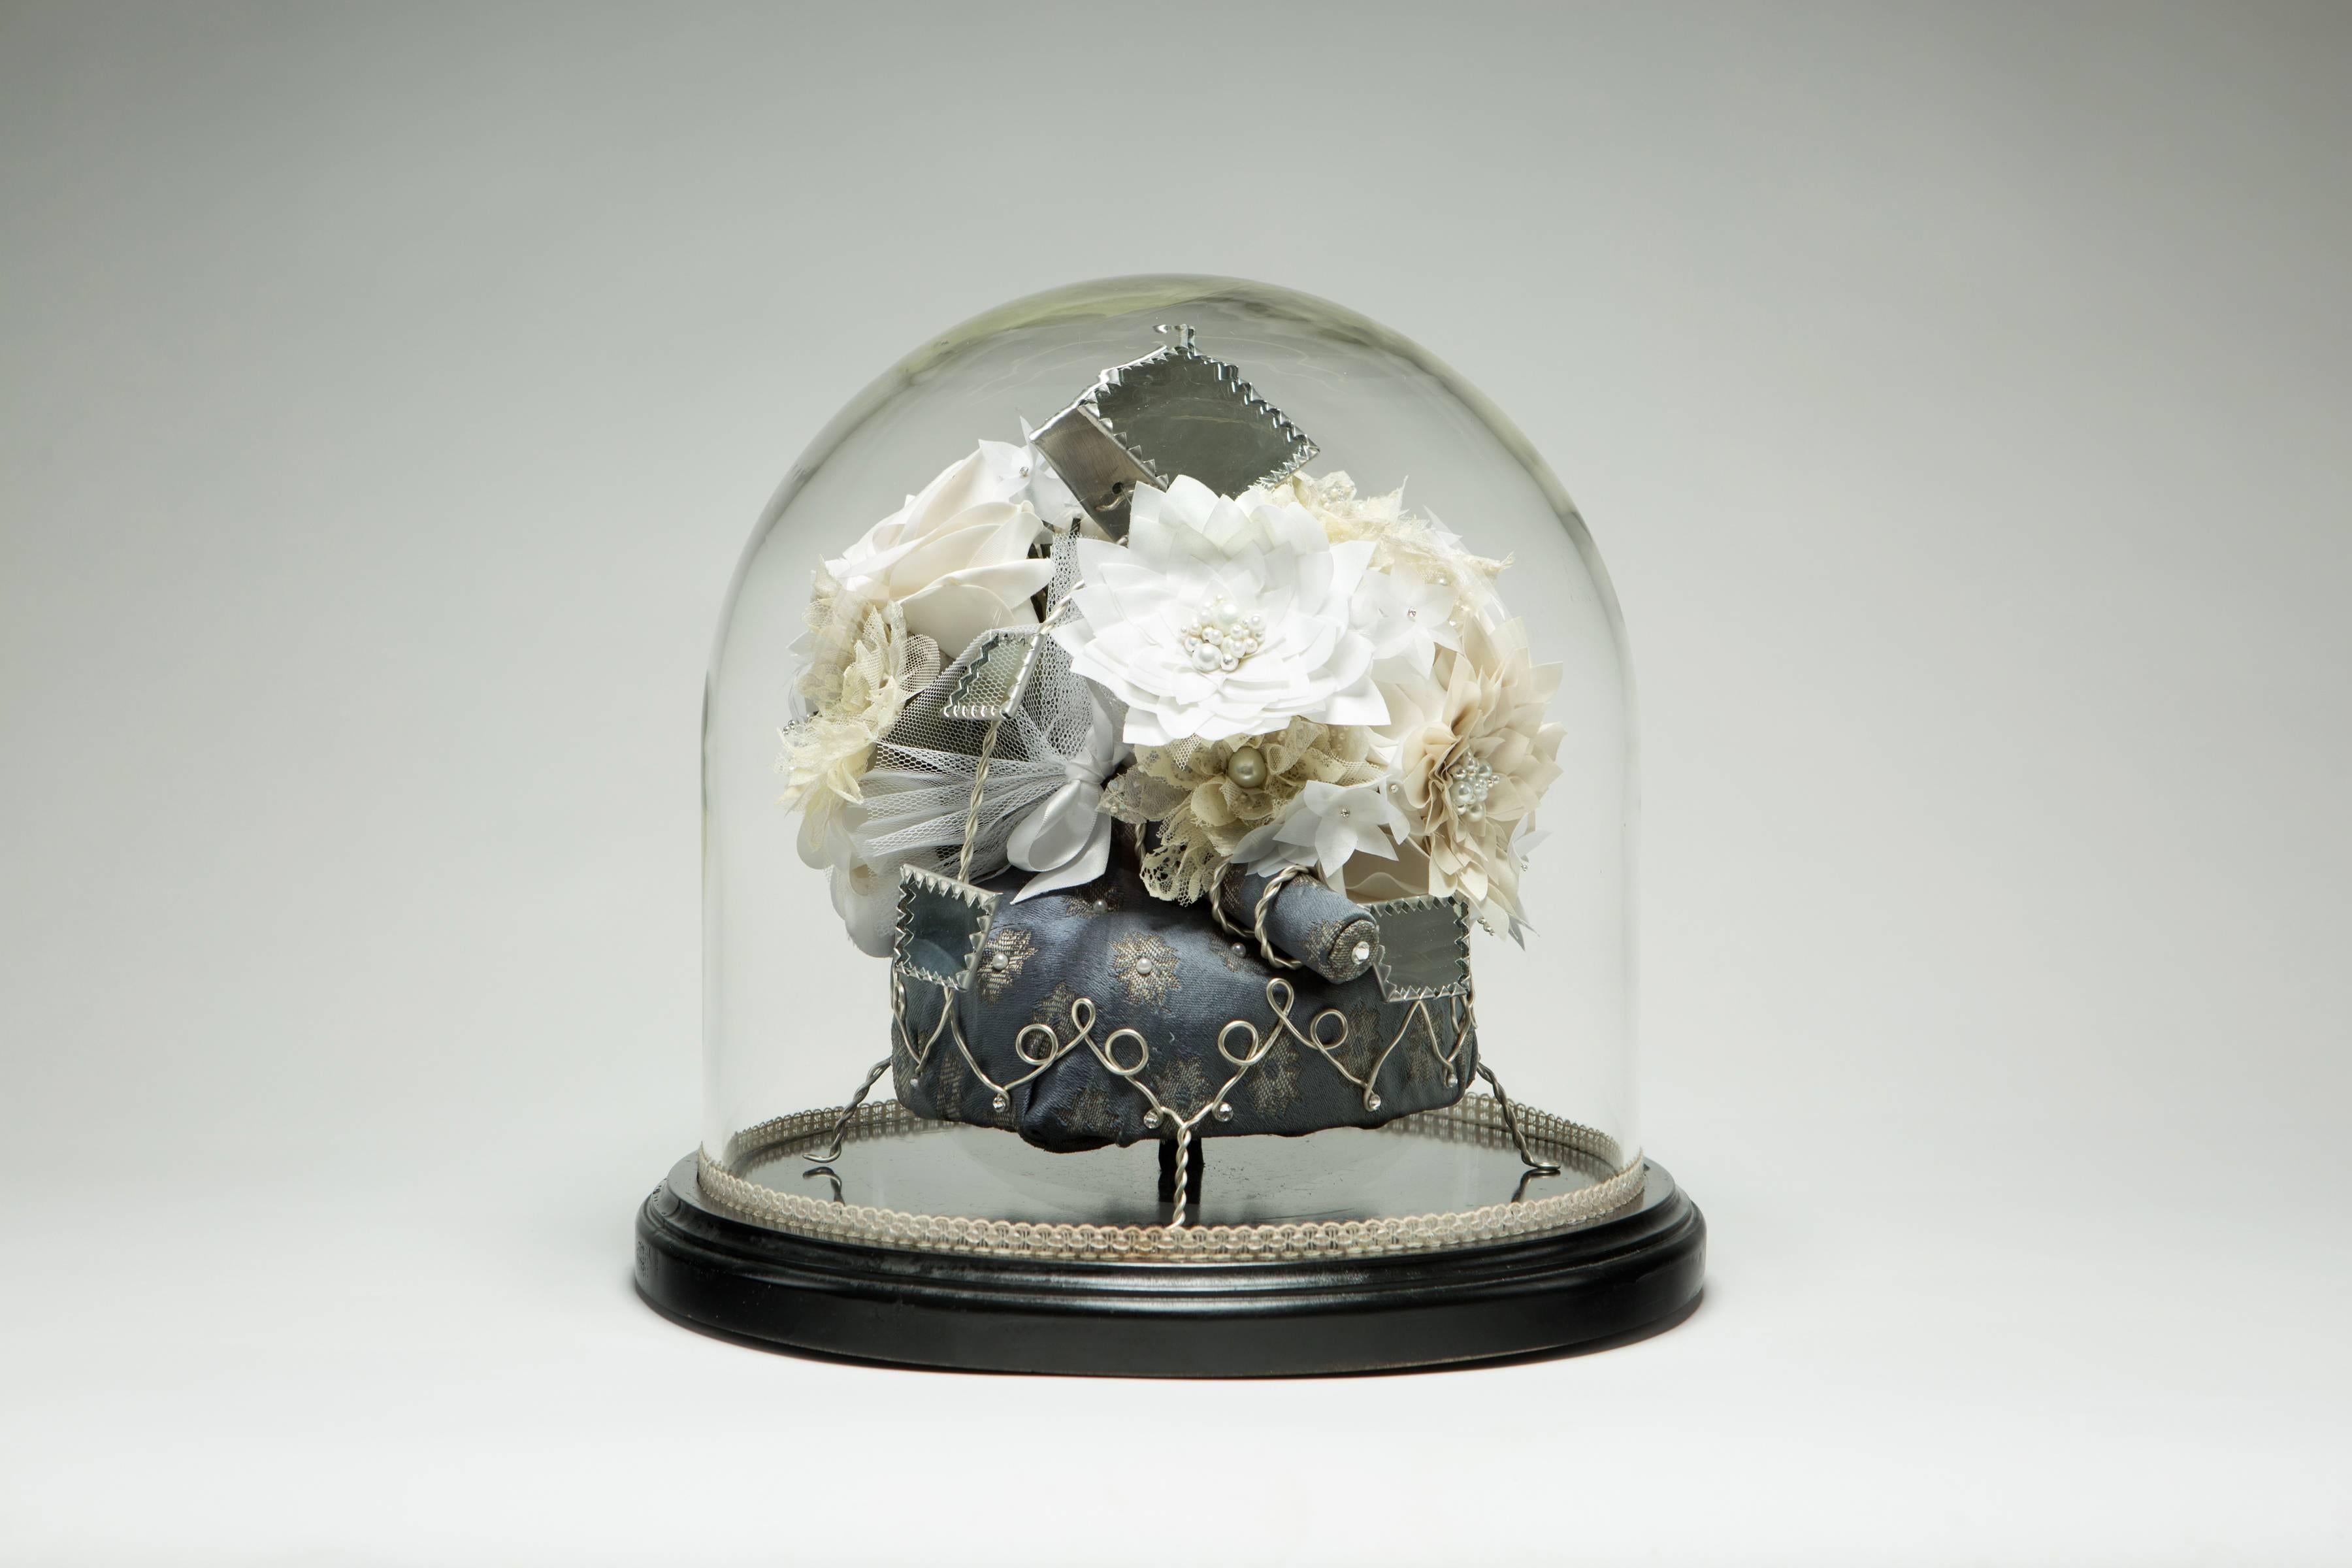 Globe de Mariée - Double Bouquet - Mixed Media Art by Carlton Scott Sturgill